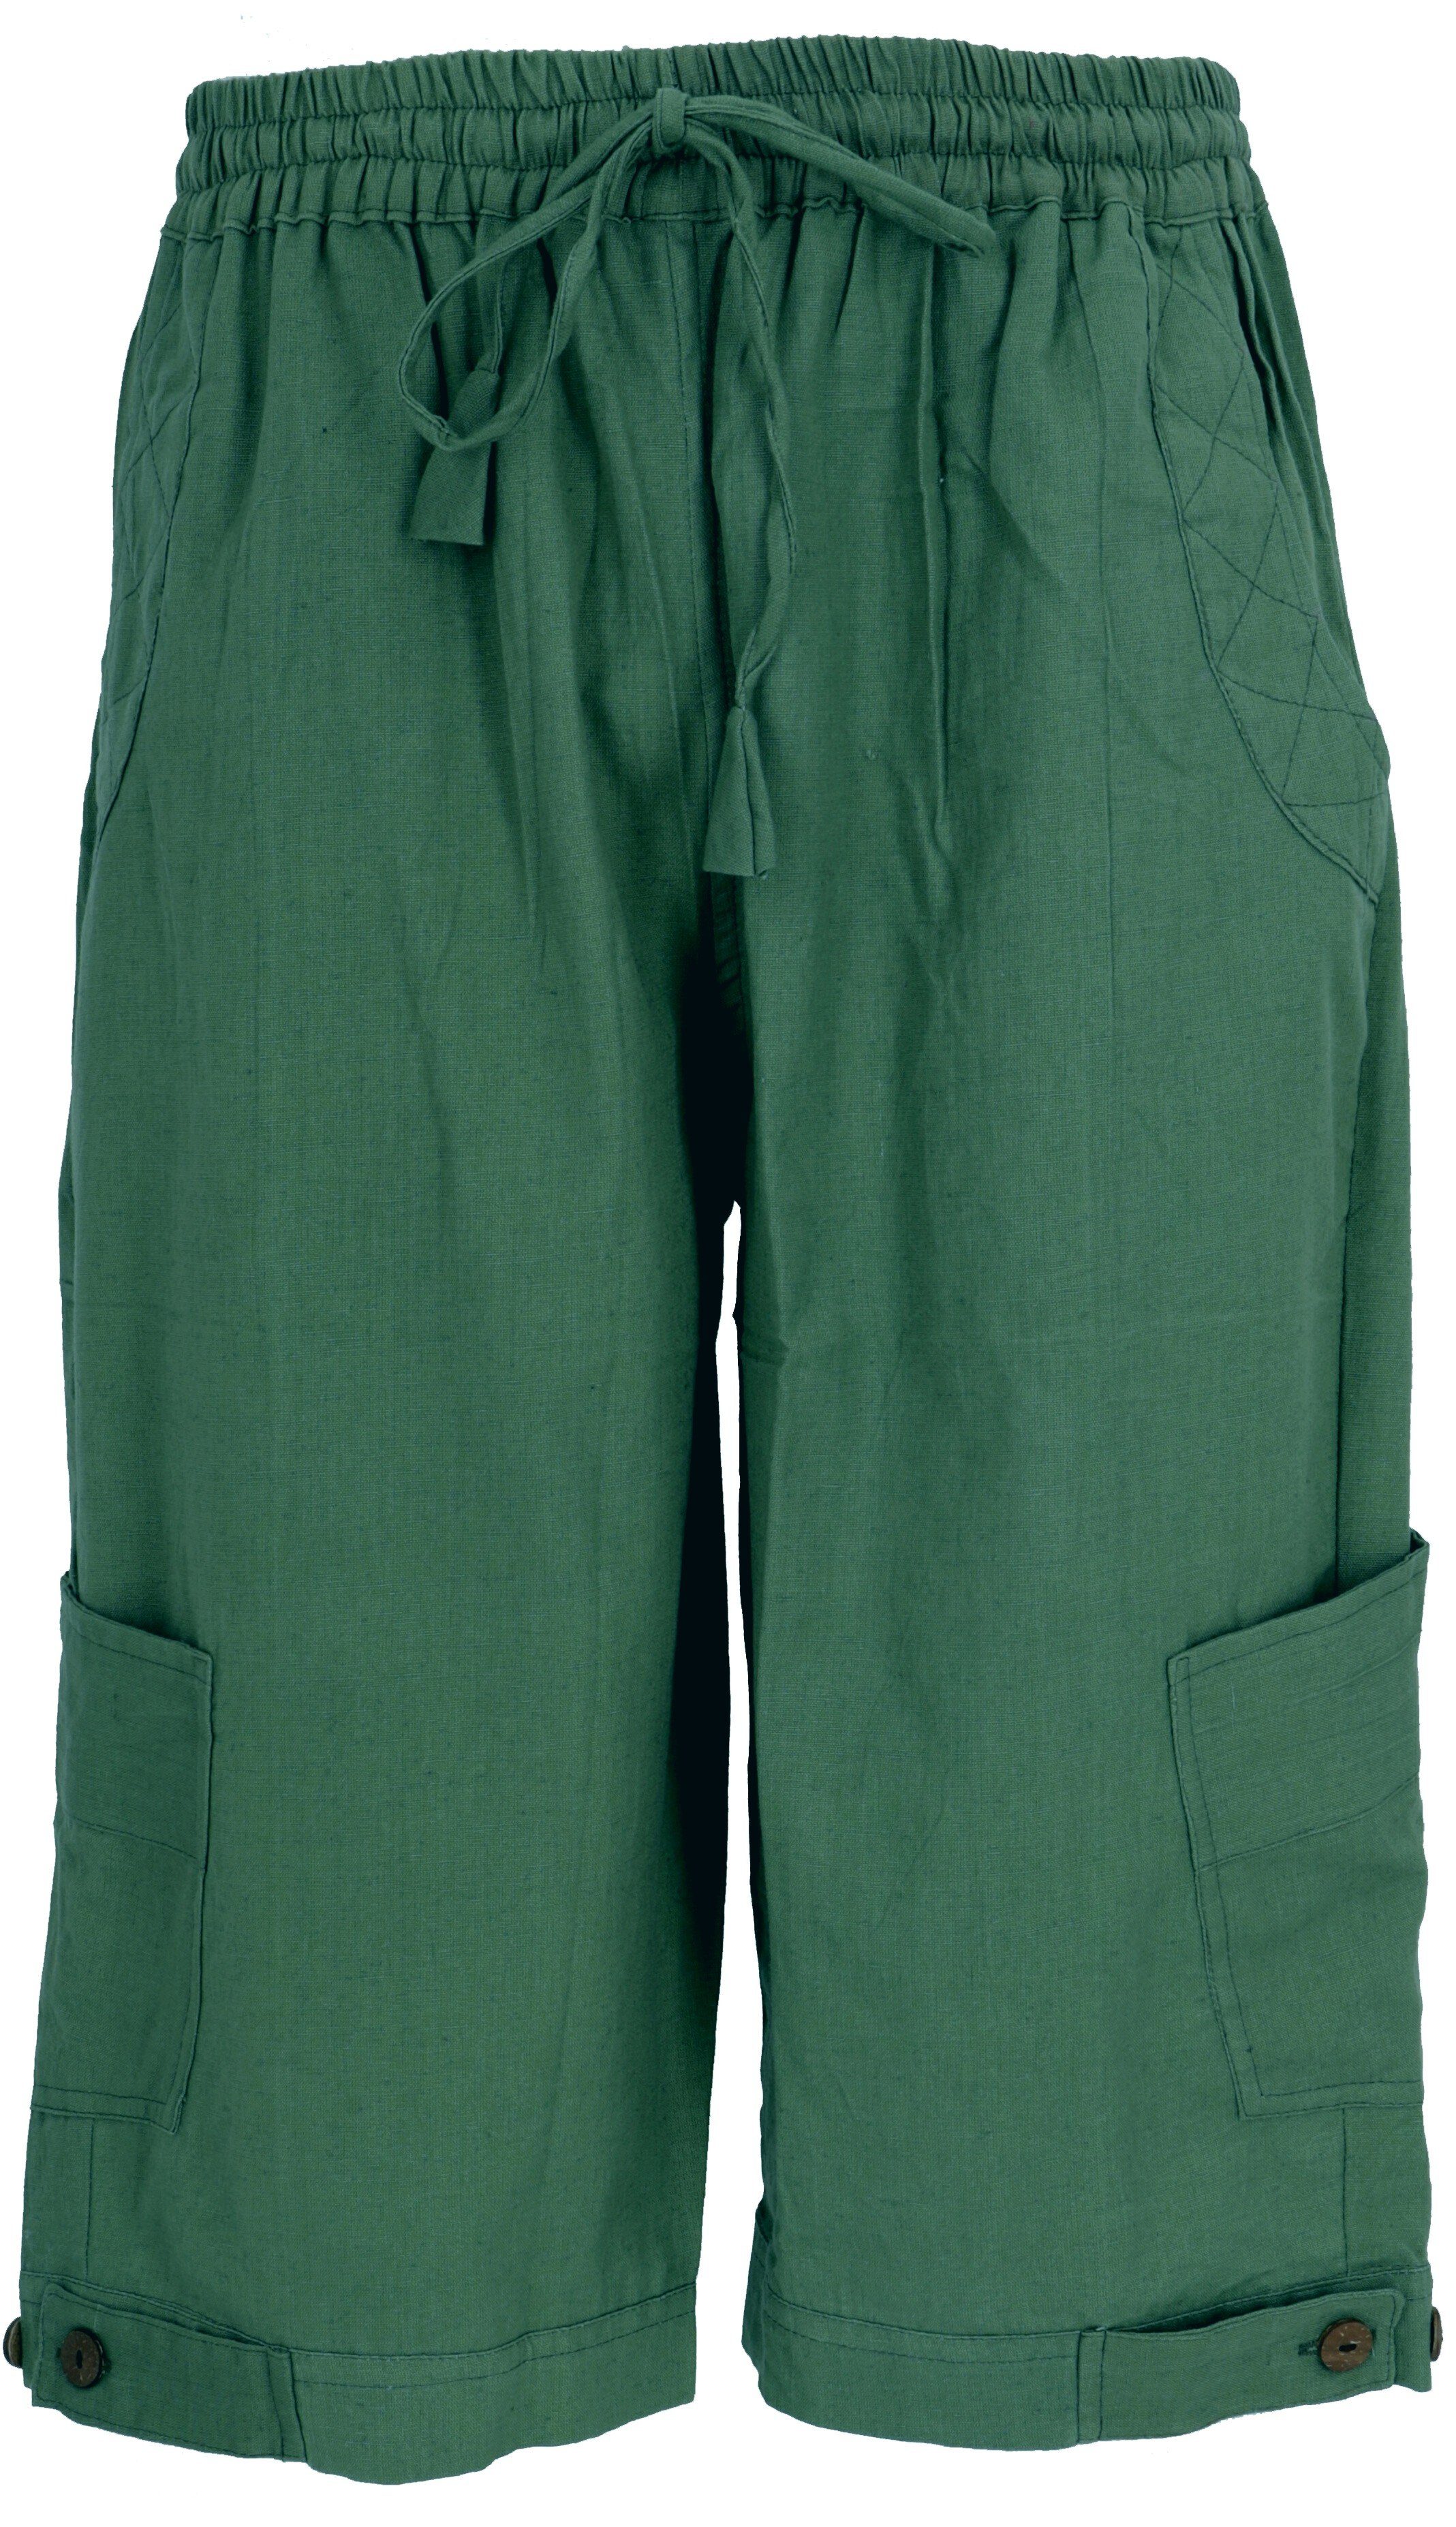 Guru-Shop Relaxhose 3/4 Yogahose, Goa Hose, Goa Shorts - grün Ethno Style, alternative Bekleidung